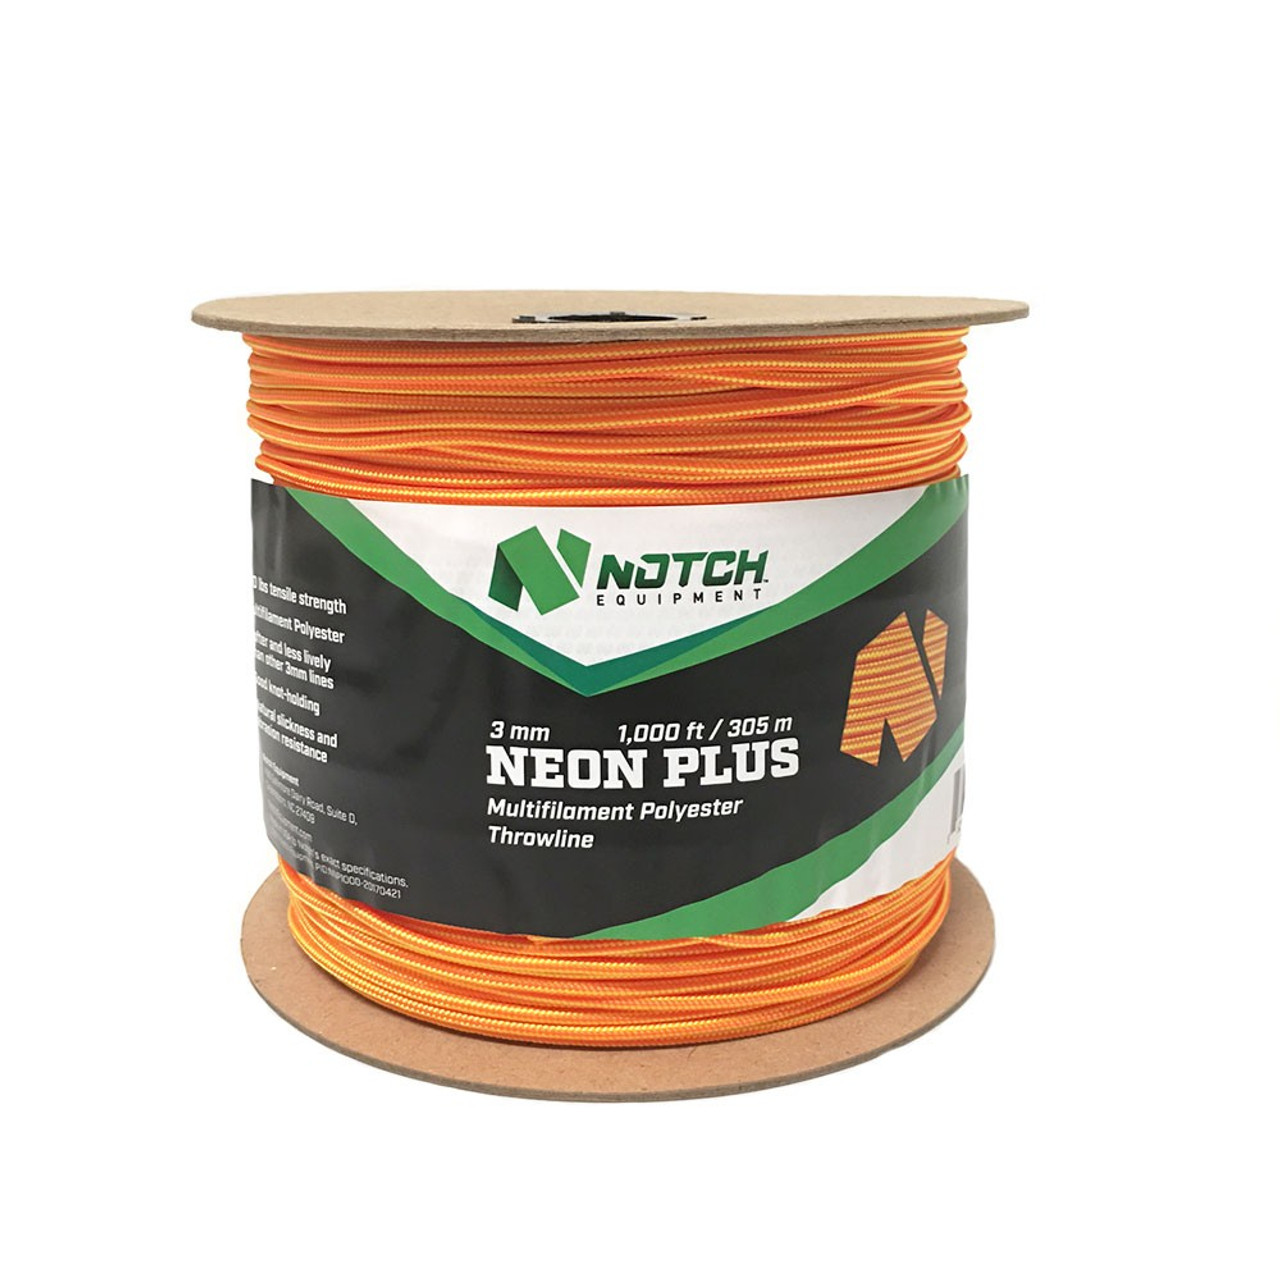 Notch Neon Plus 3mm Throwline